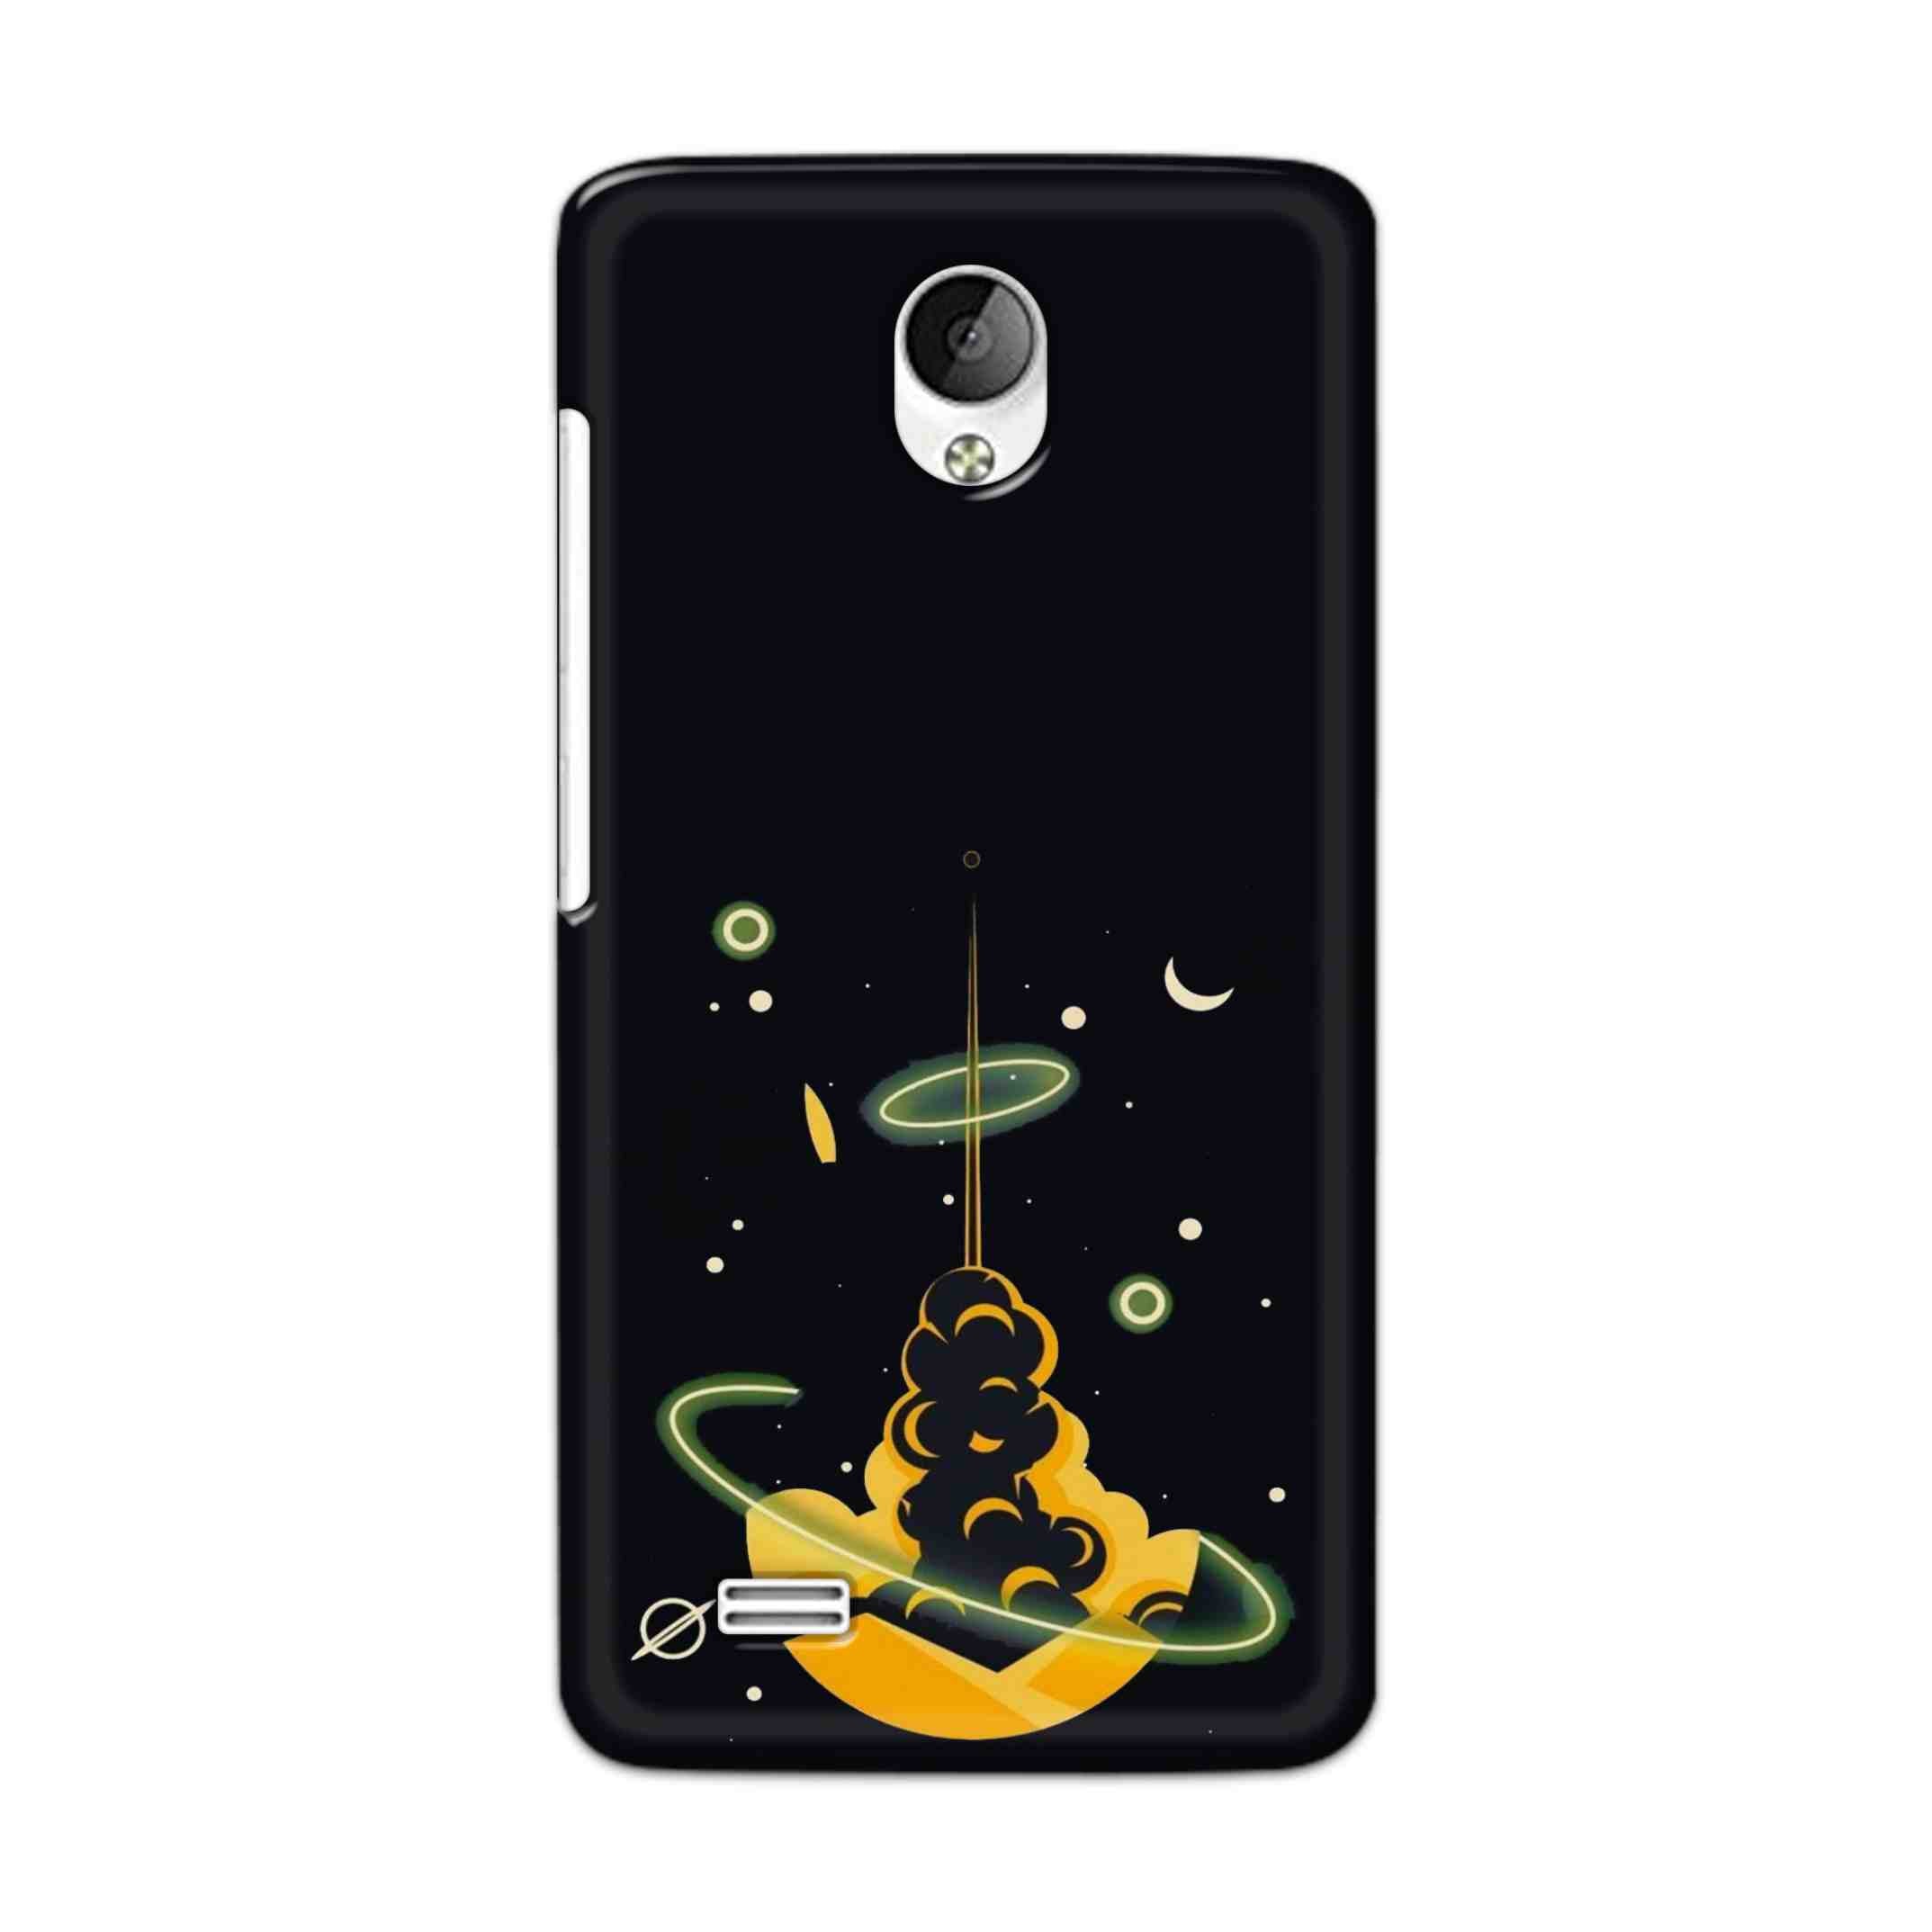 Buy Moon Hard Back Mobile Phone Case Cover For Vivo Y21 / Vivo Y21L Online